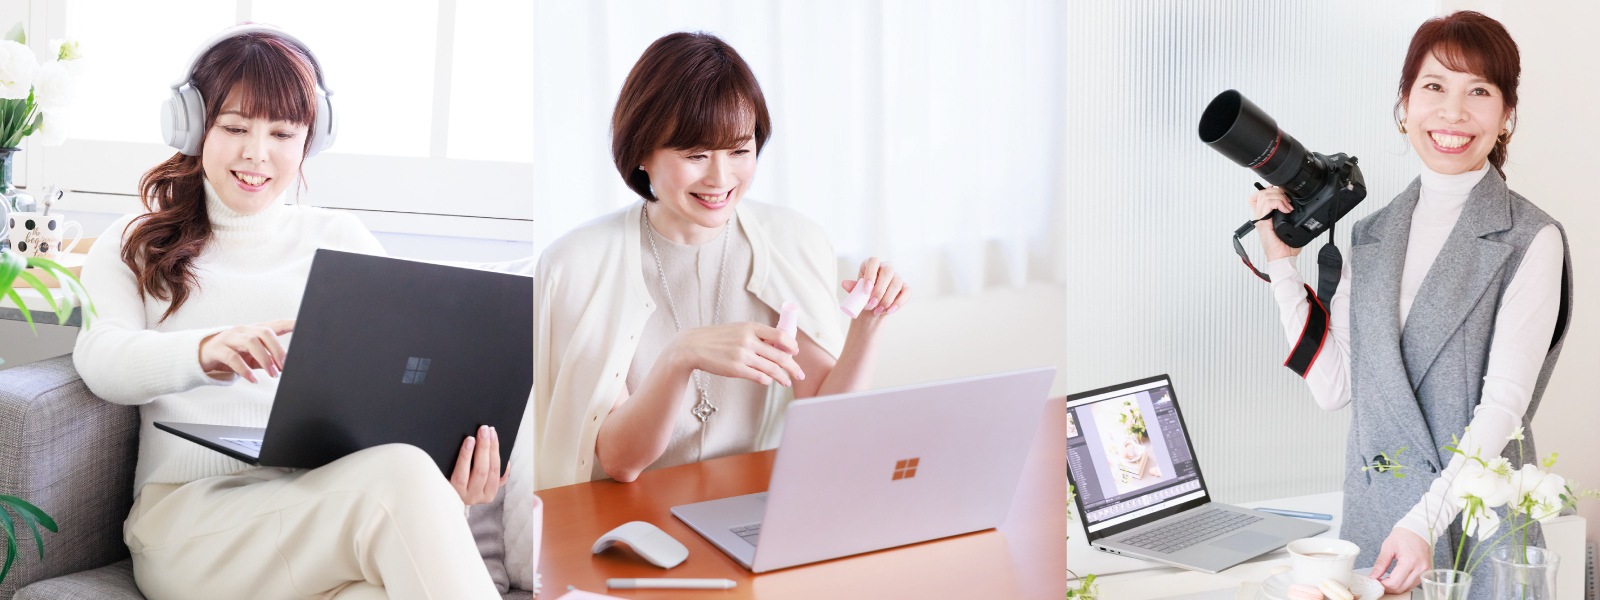 Surface Laptop を利用する3人の女性のイメージ